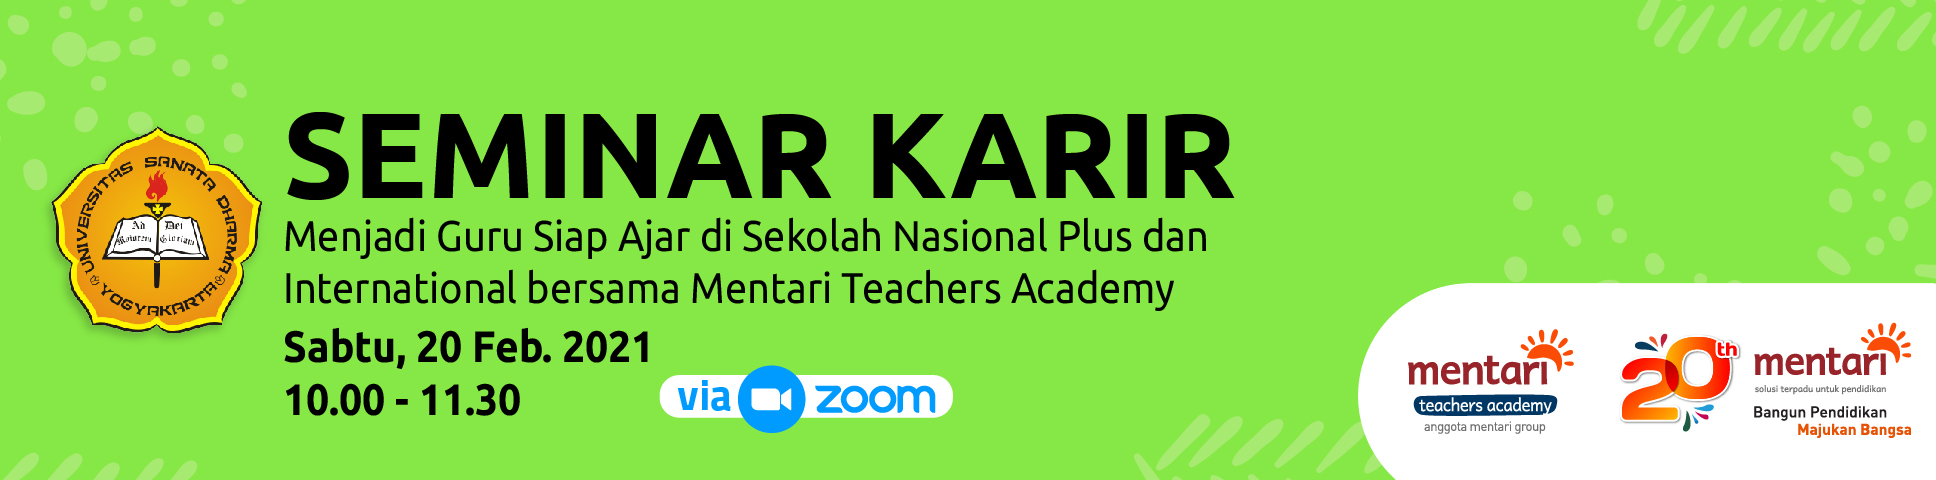 Seminar Karir - Mentari Teachers Academy - 20 Februari 2021